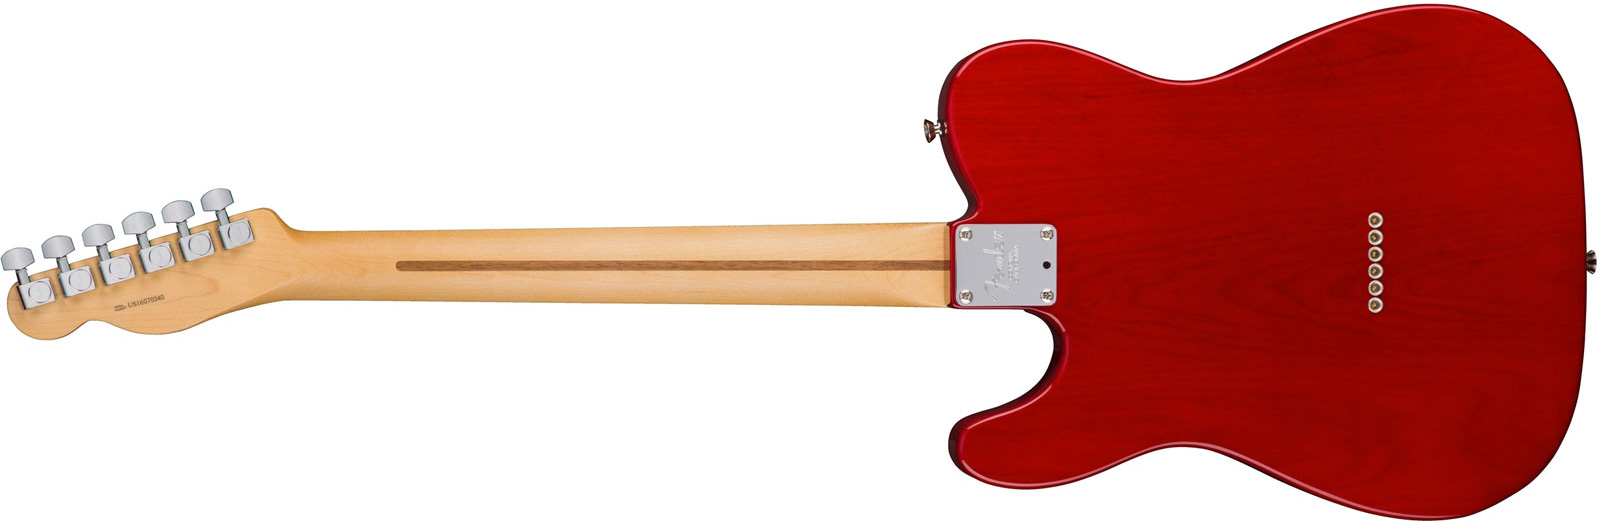 Fender Tele American Professional 2s Usa Rw - Crimson Red Transparent - Guitarra eléctrica con forma de str. - Variation 1